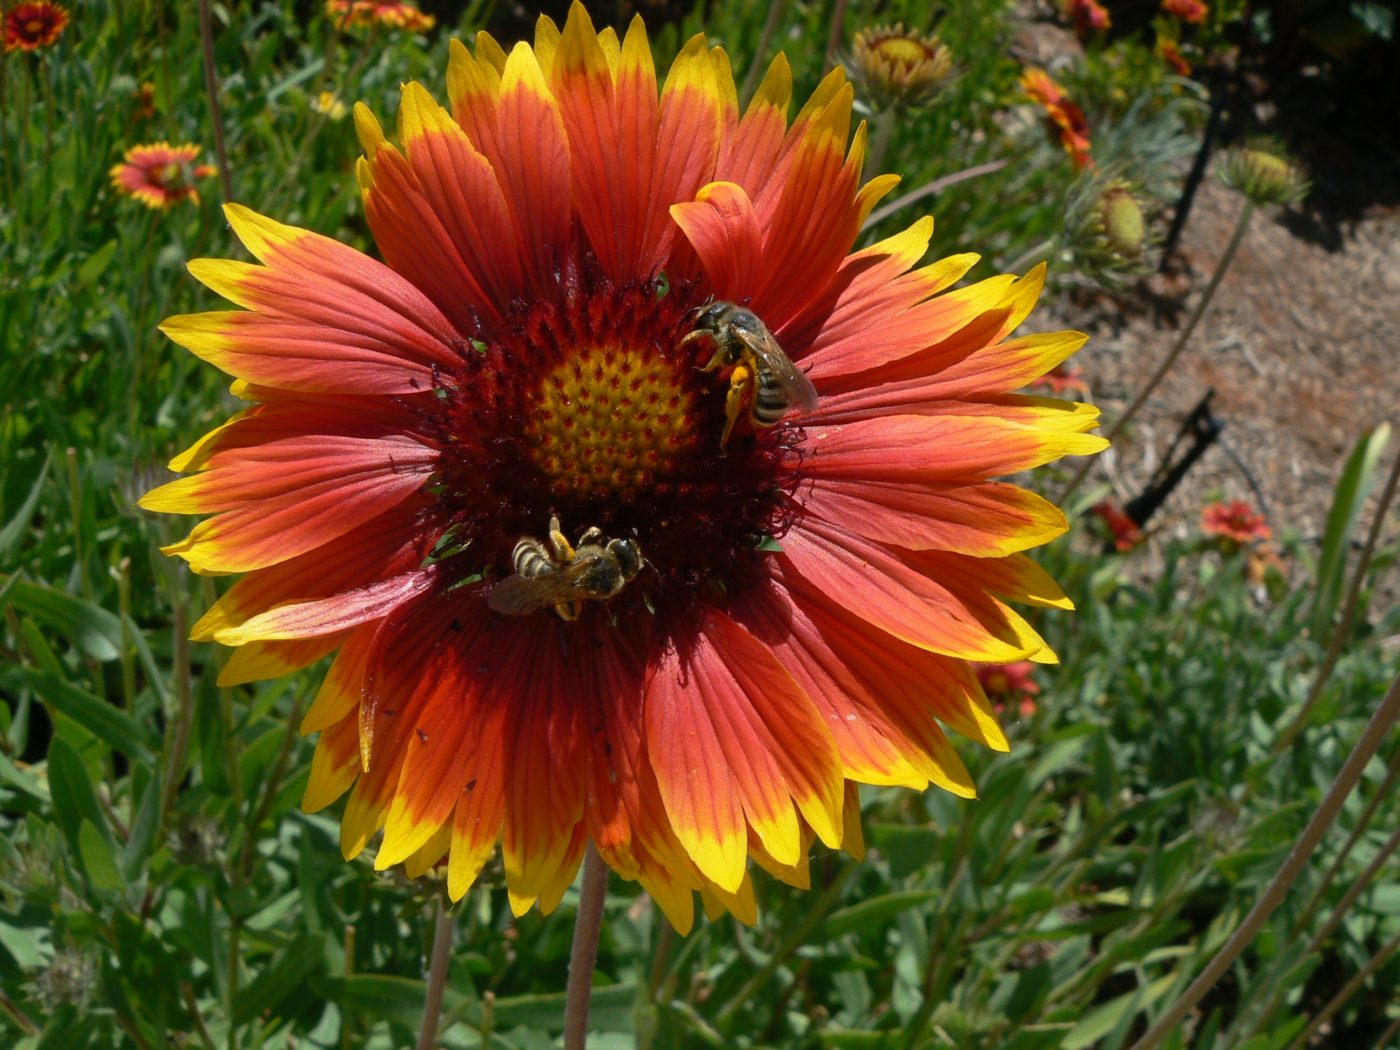 Honey Bees, Apis mellifera, Collecting Nectar